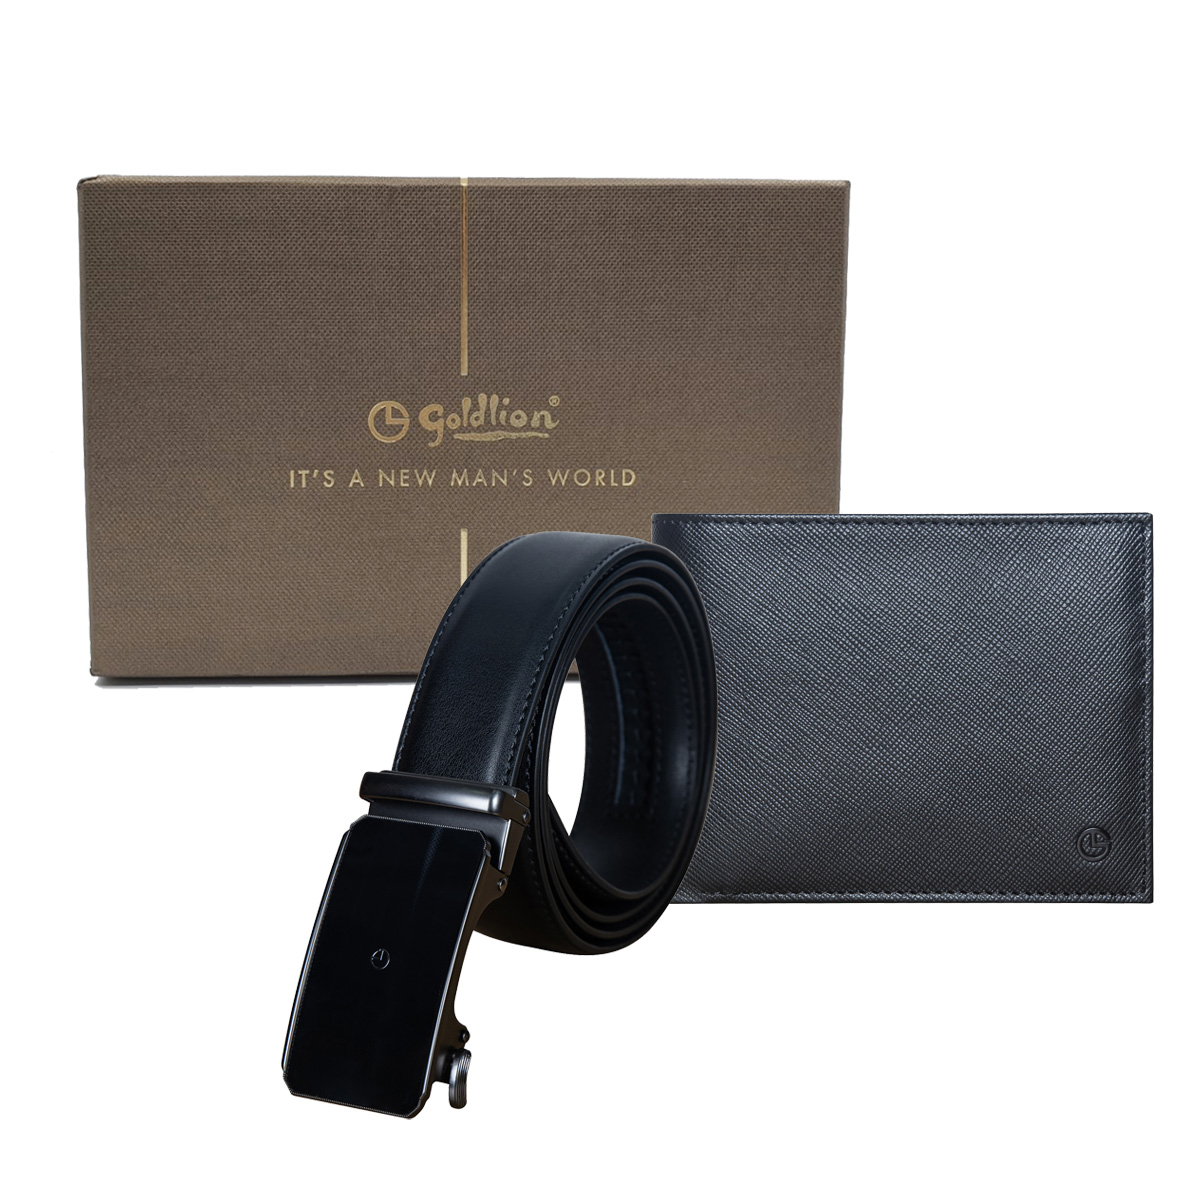 [Online Exclusive] Goldlion Genuine Leather 12 Cards Slot Wallet & Auto Lock Belt Gift Set